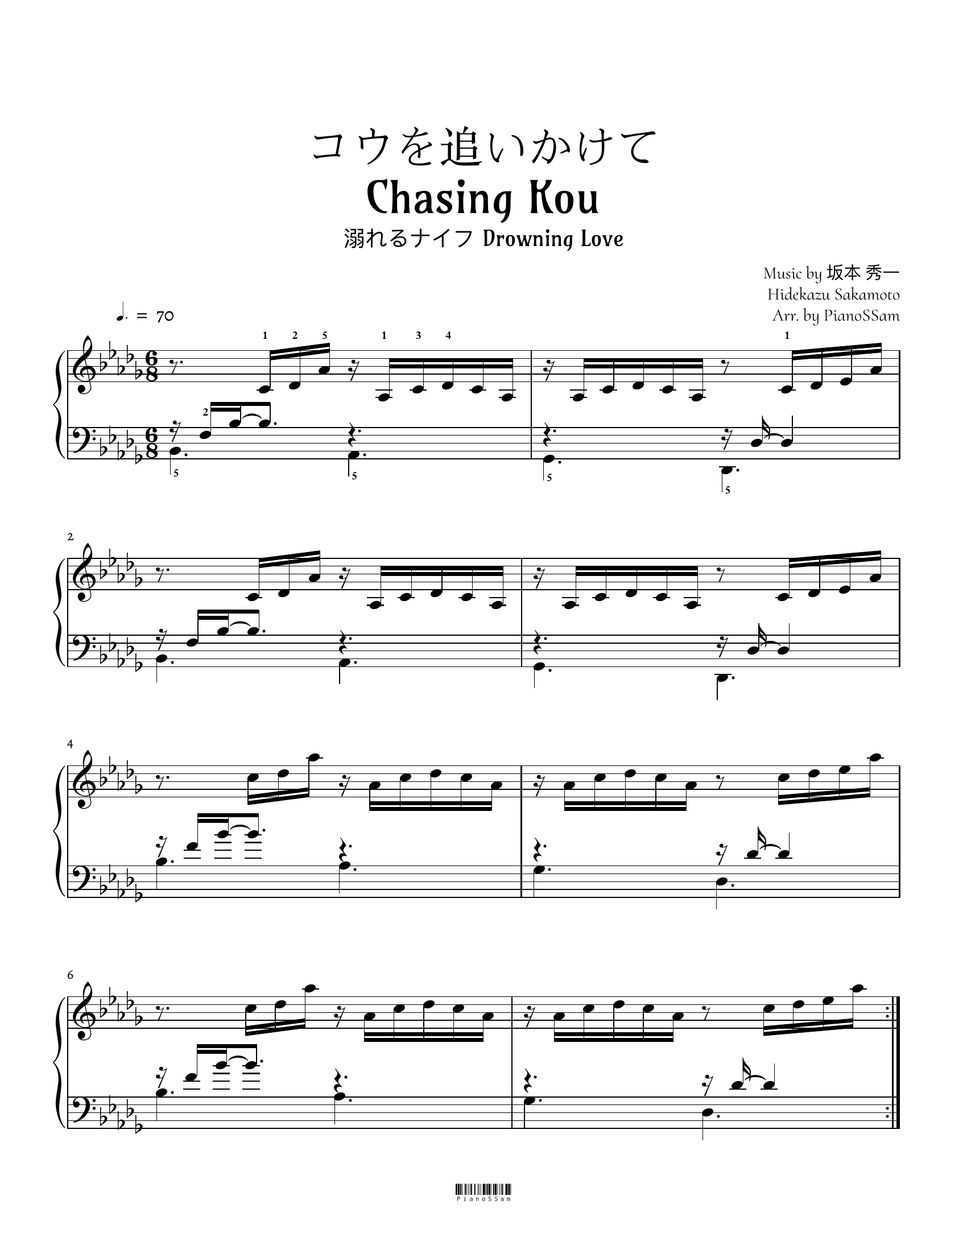 Hidekazu Sakamoto - Chasing Kou (Drowning Love) by PianoSSam